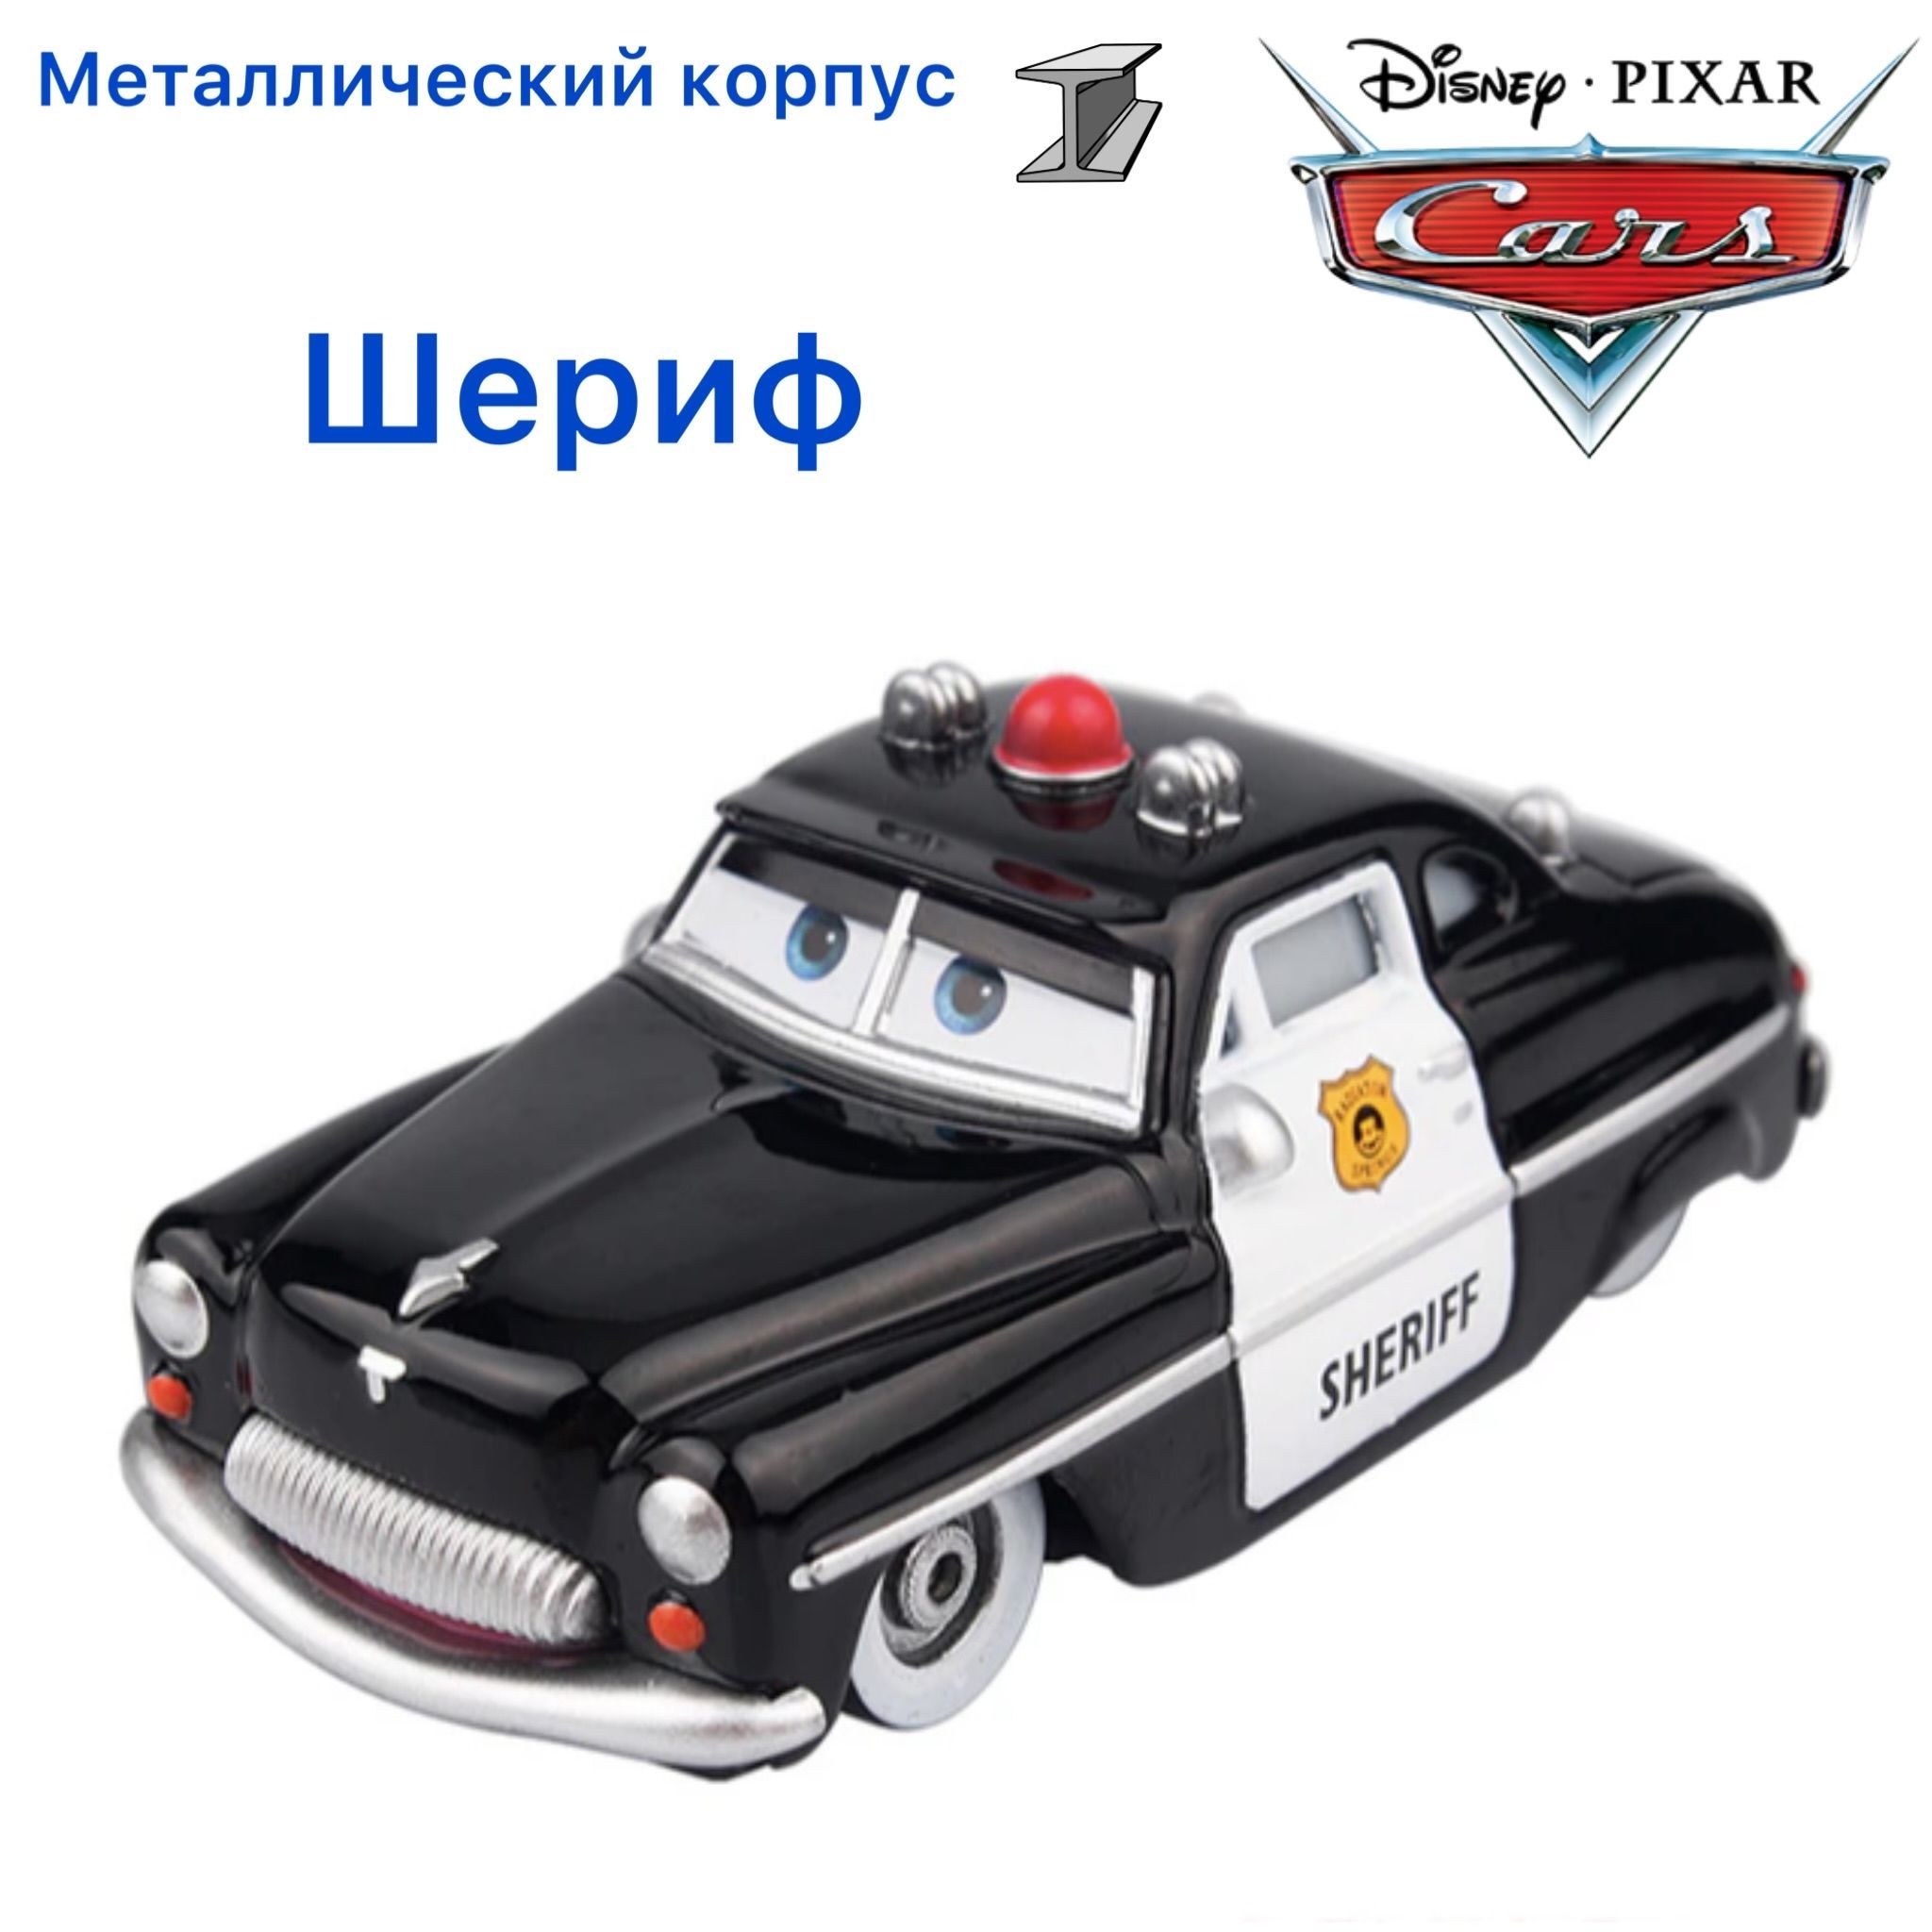 Тачки металл. Тачки Шериф. Шериф из тачек. Cars Sheriff Toy. Toys Sheriff Metal car 1:40 1957.